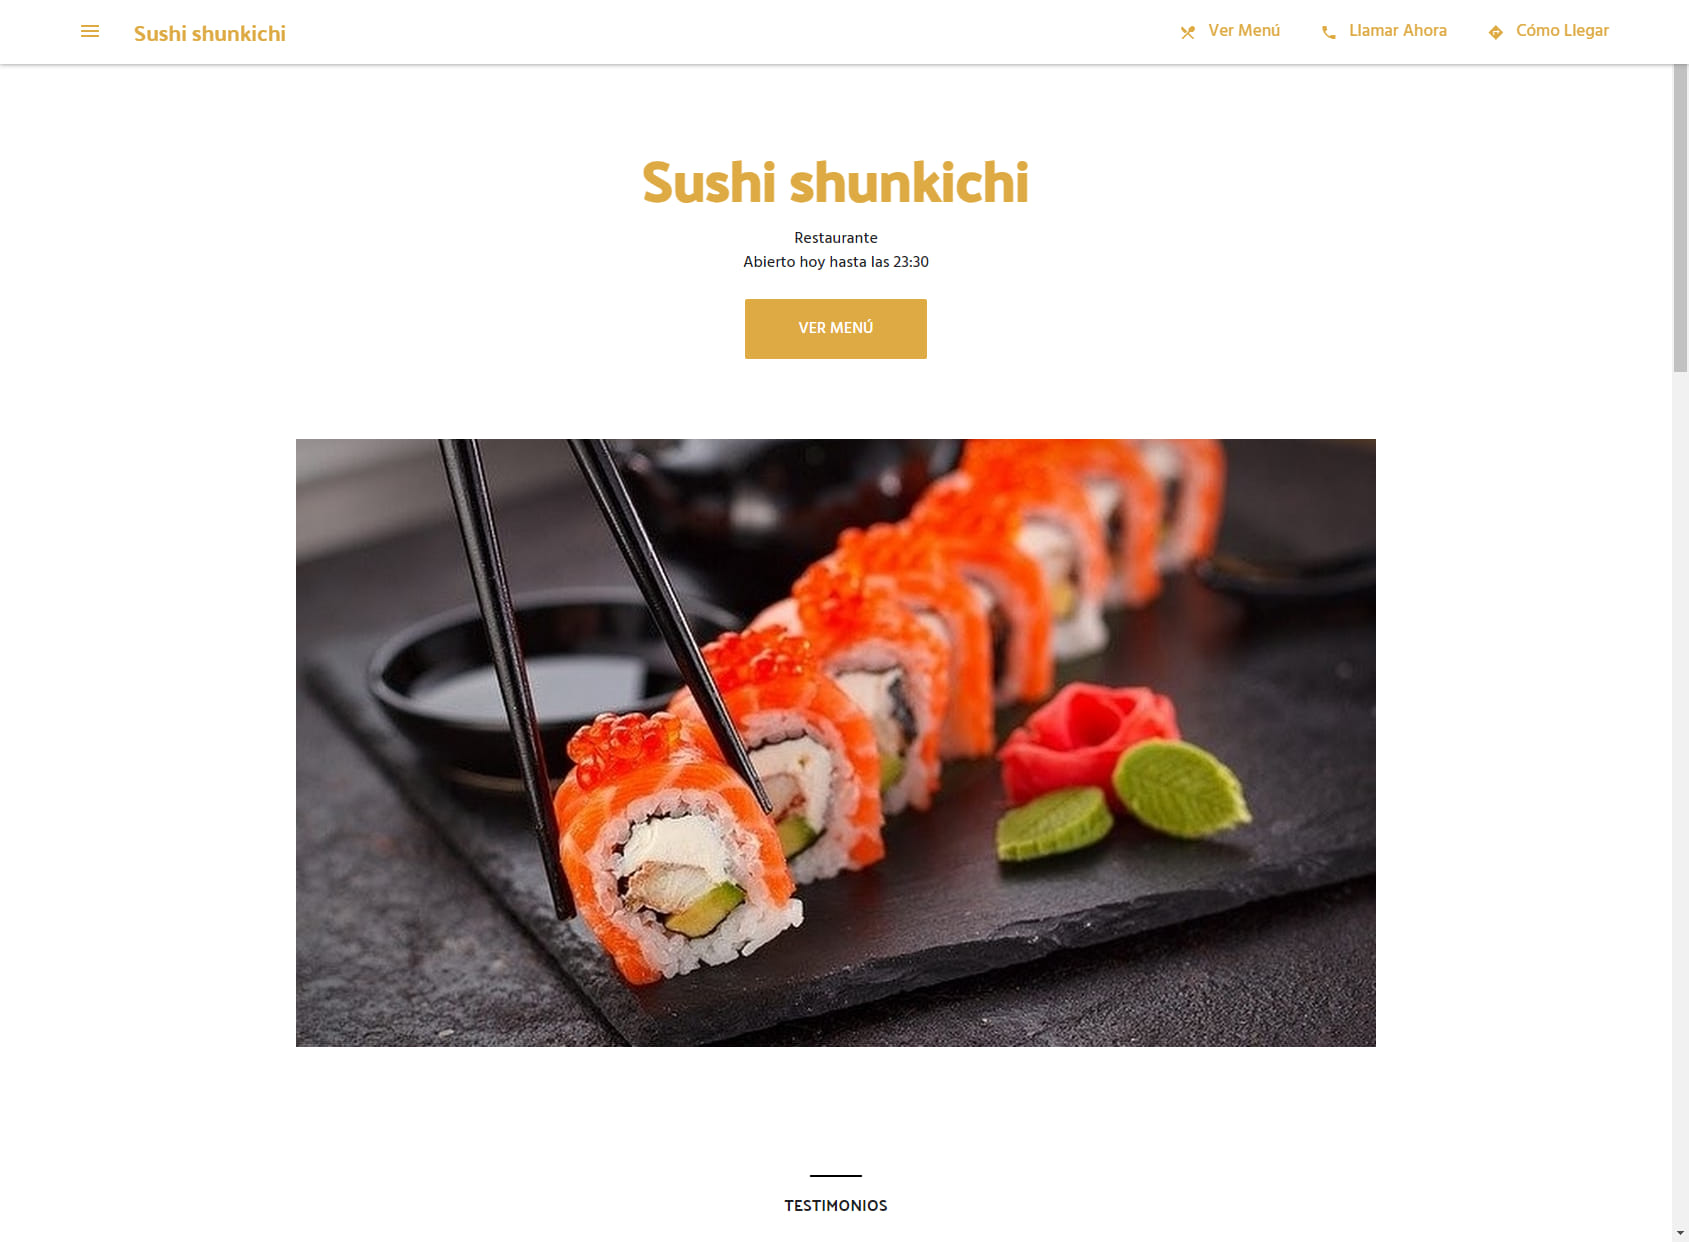 Sushi shunkichi